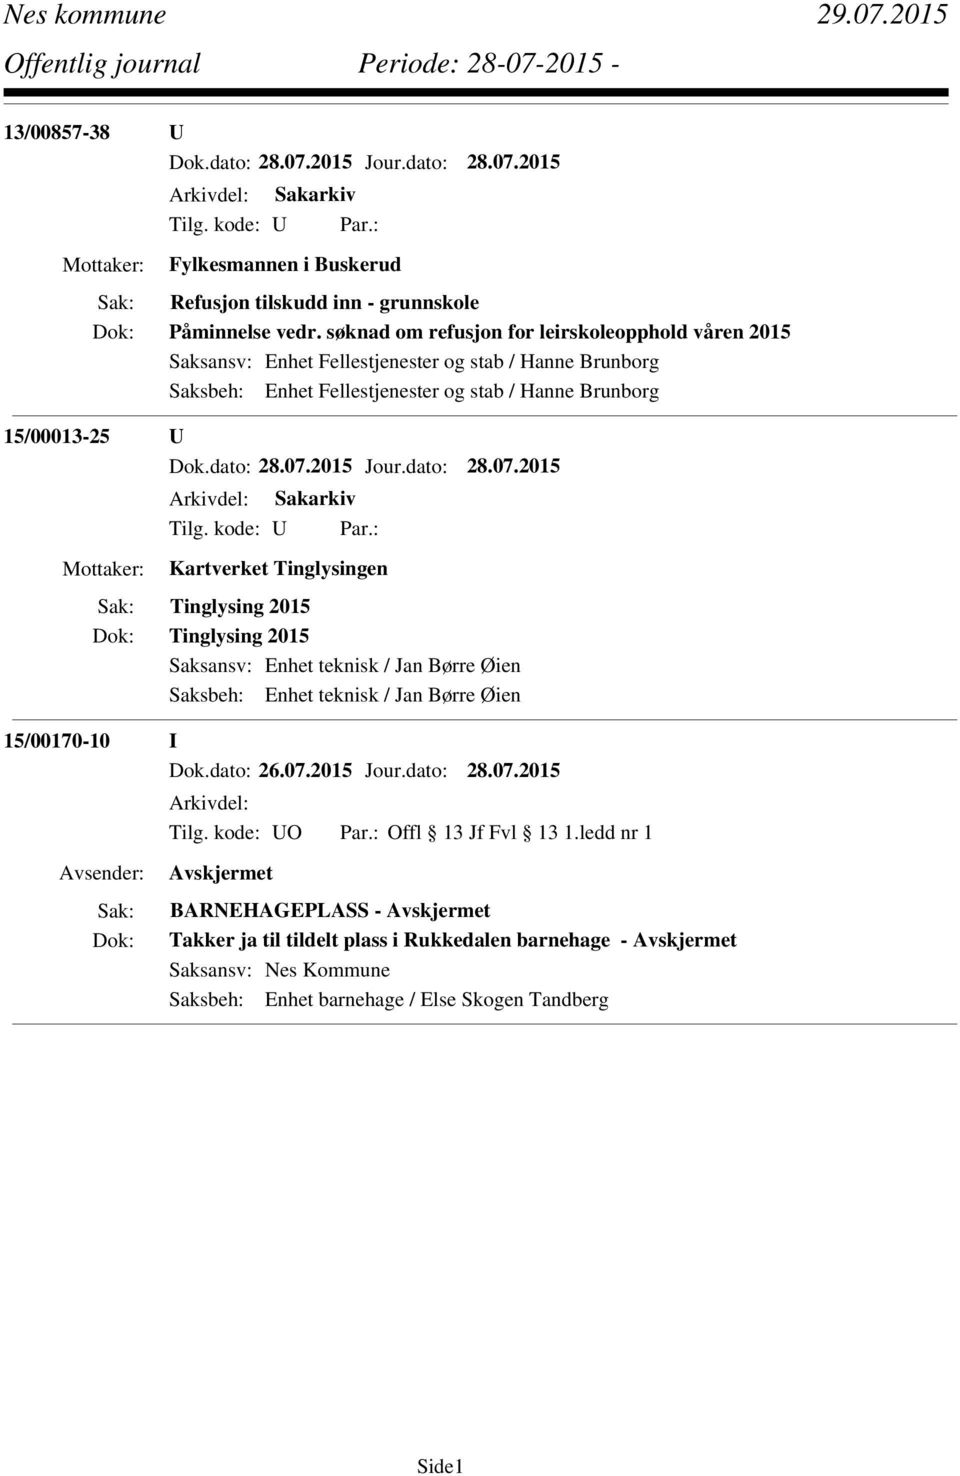 15/00013-25 U Kartverket Tinglysingen Tinglysing 2015 Tinglysing 2015 Saksansv: Enhet teknisk / Jan Børre Øien Saksbeh: Enhet teknisk / Jan Børre Øien 15/00170-10 I